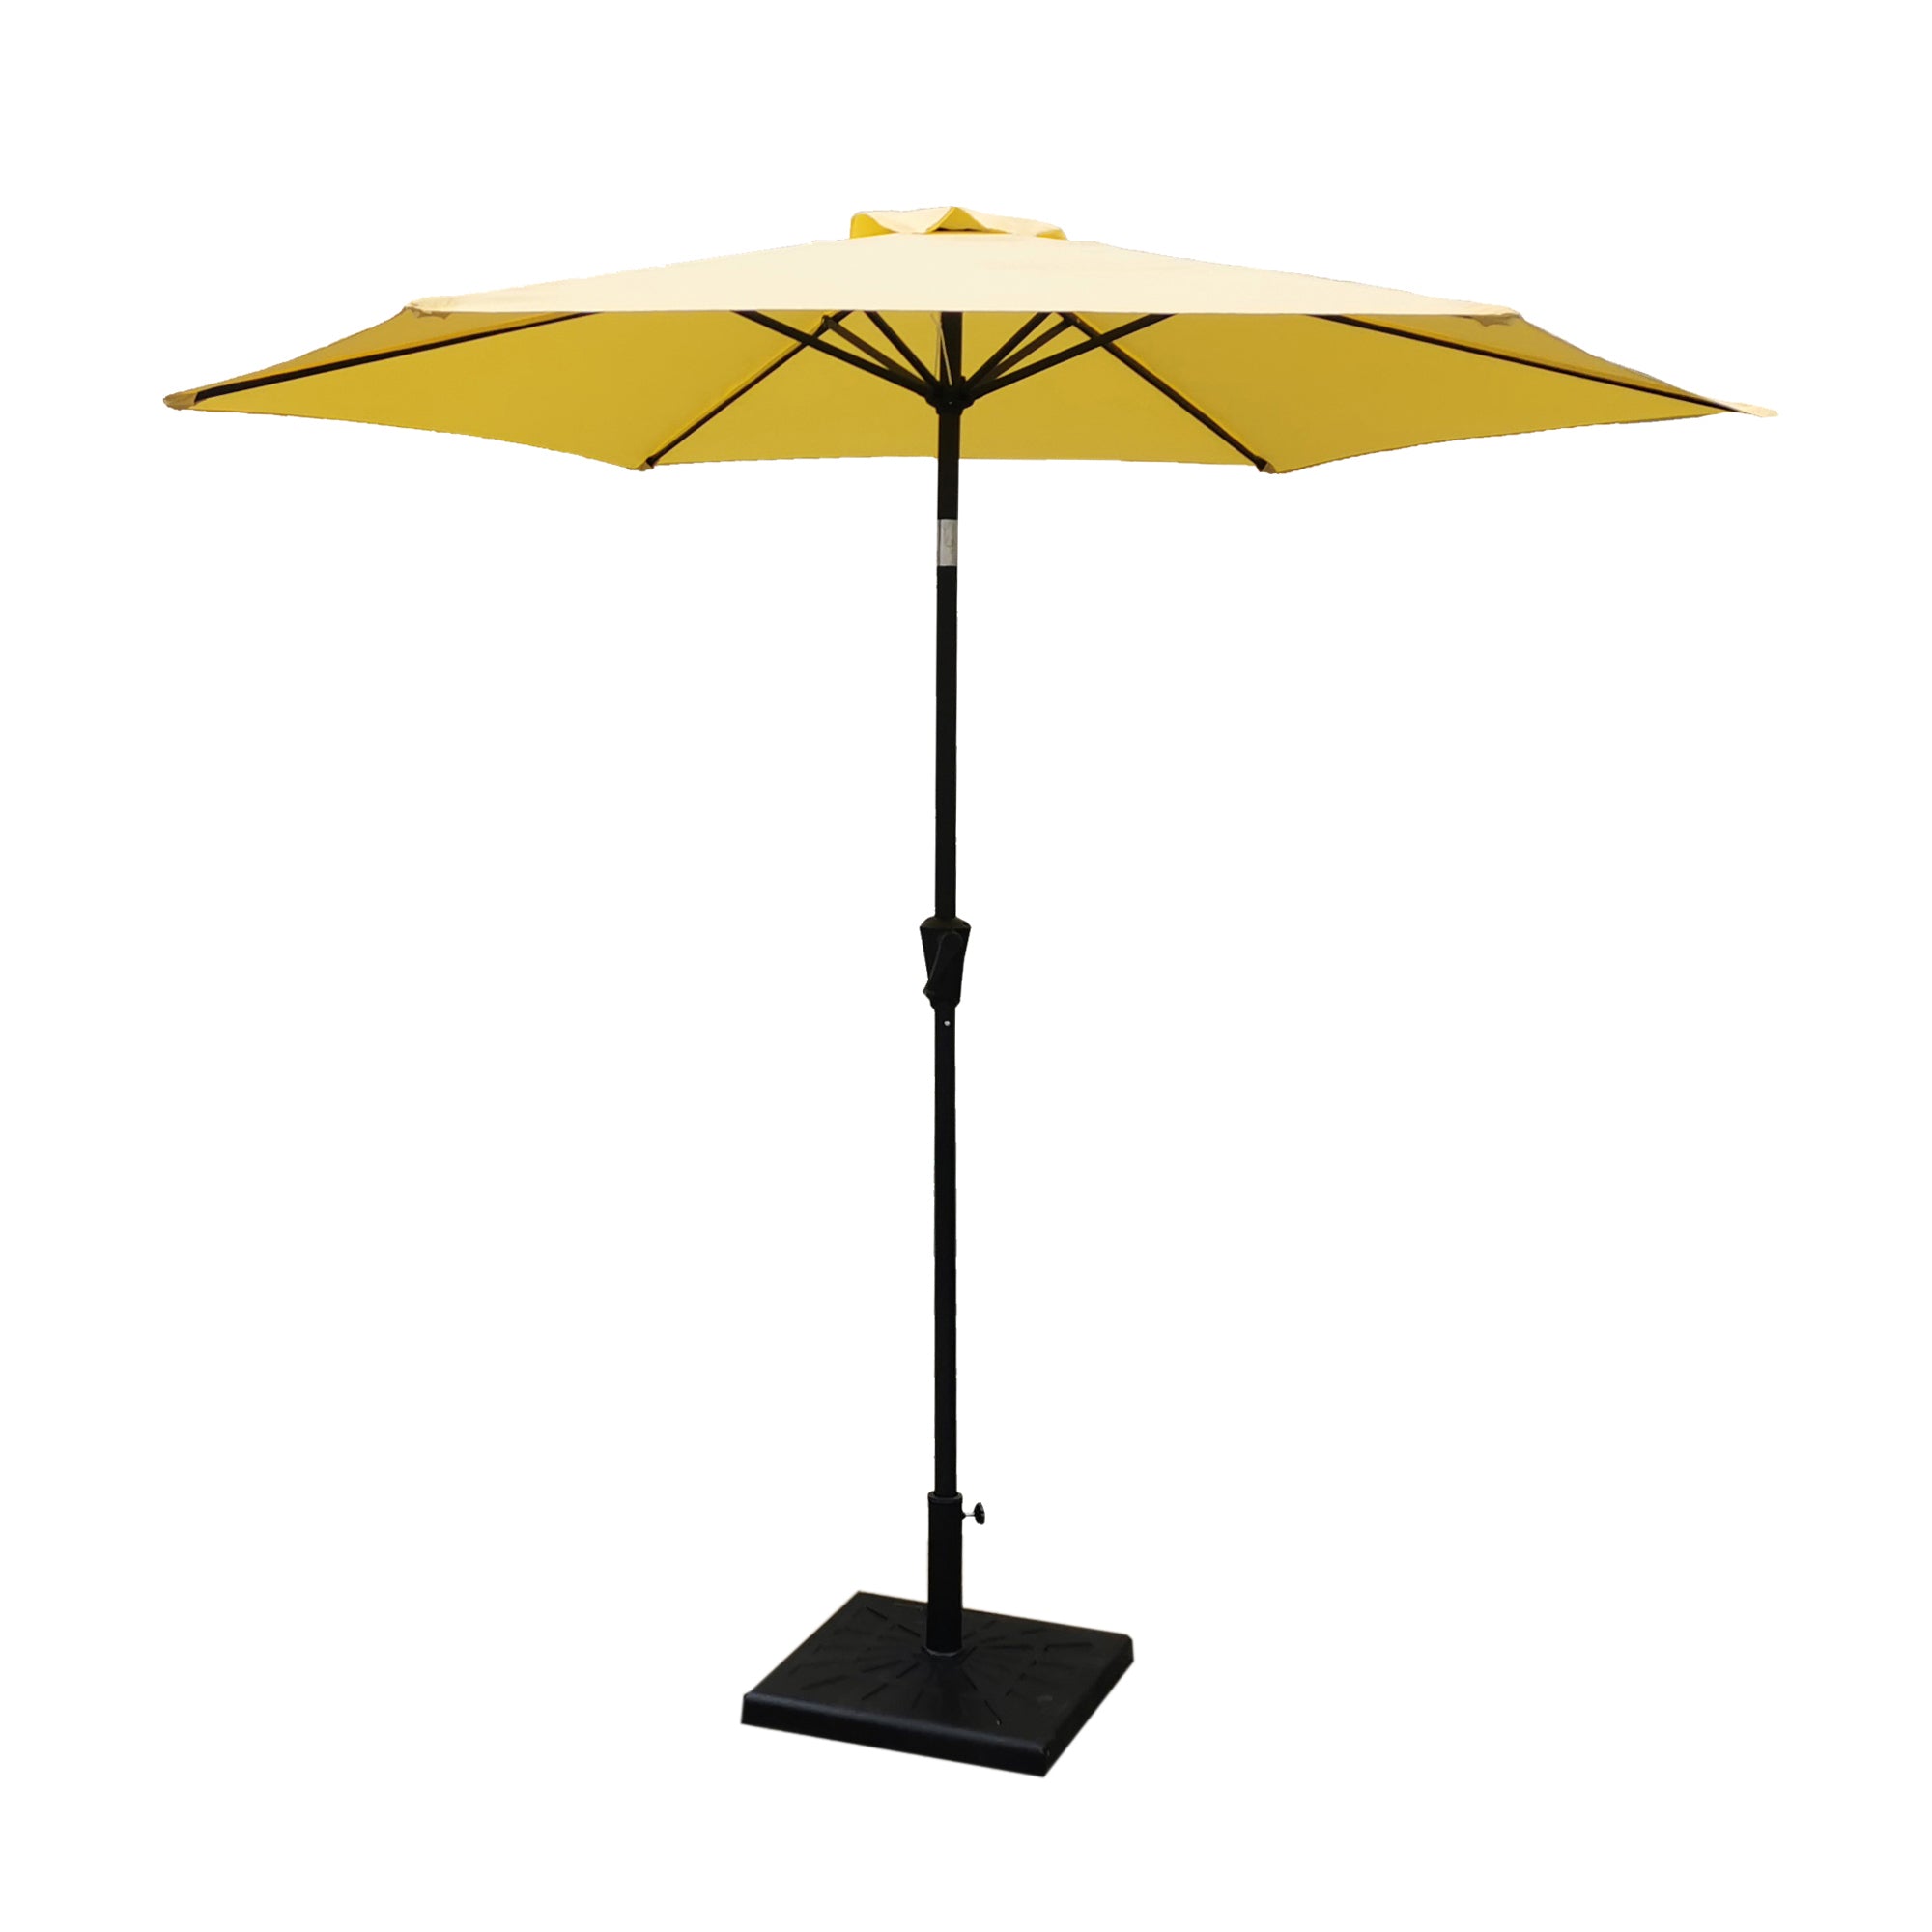 8.8-feet-Outdoor-Aluminum-Patio-Umbrella,--with-42-Pound-Square-Resin-Umbrella-Base,-Push-Button-Tilt-and-Crank-lift,-Yellow-Umbrellas-&-Sunshades